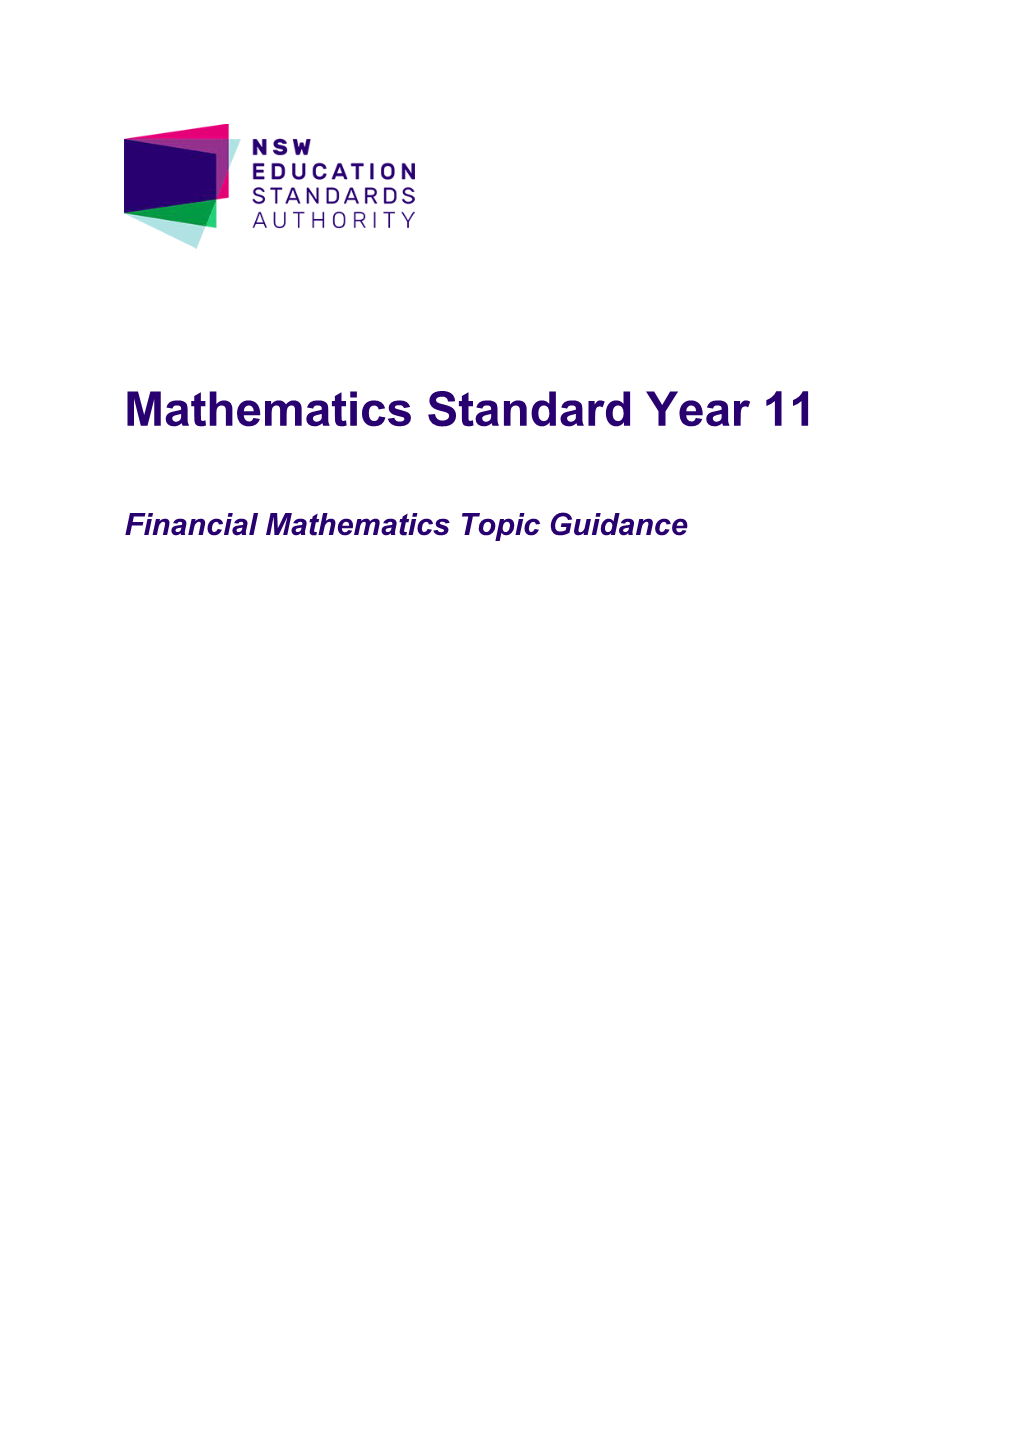 Year 11 Mathematics Standard Topic Guidance: Financial Mathematics